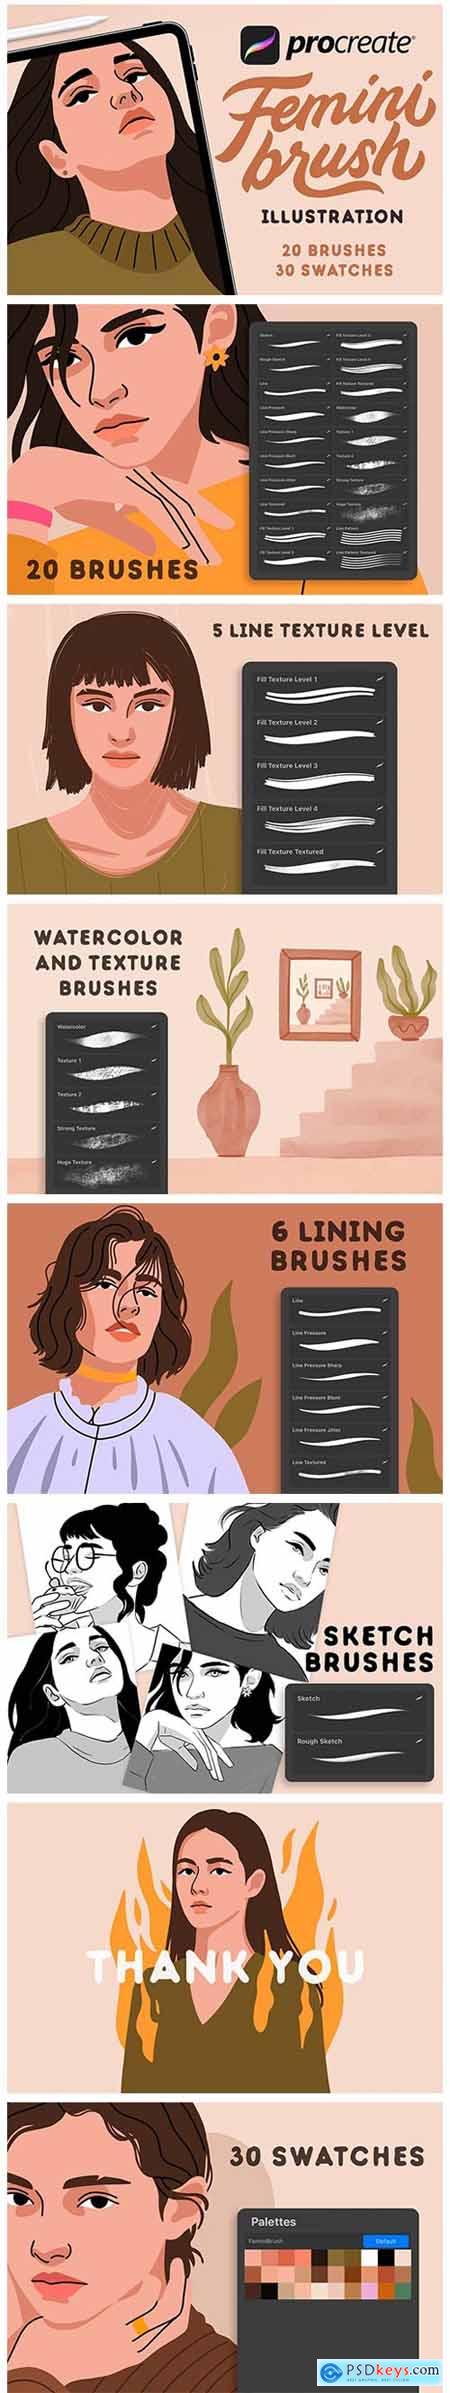 FeminiBrush - Procreate Brushes 4887975